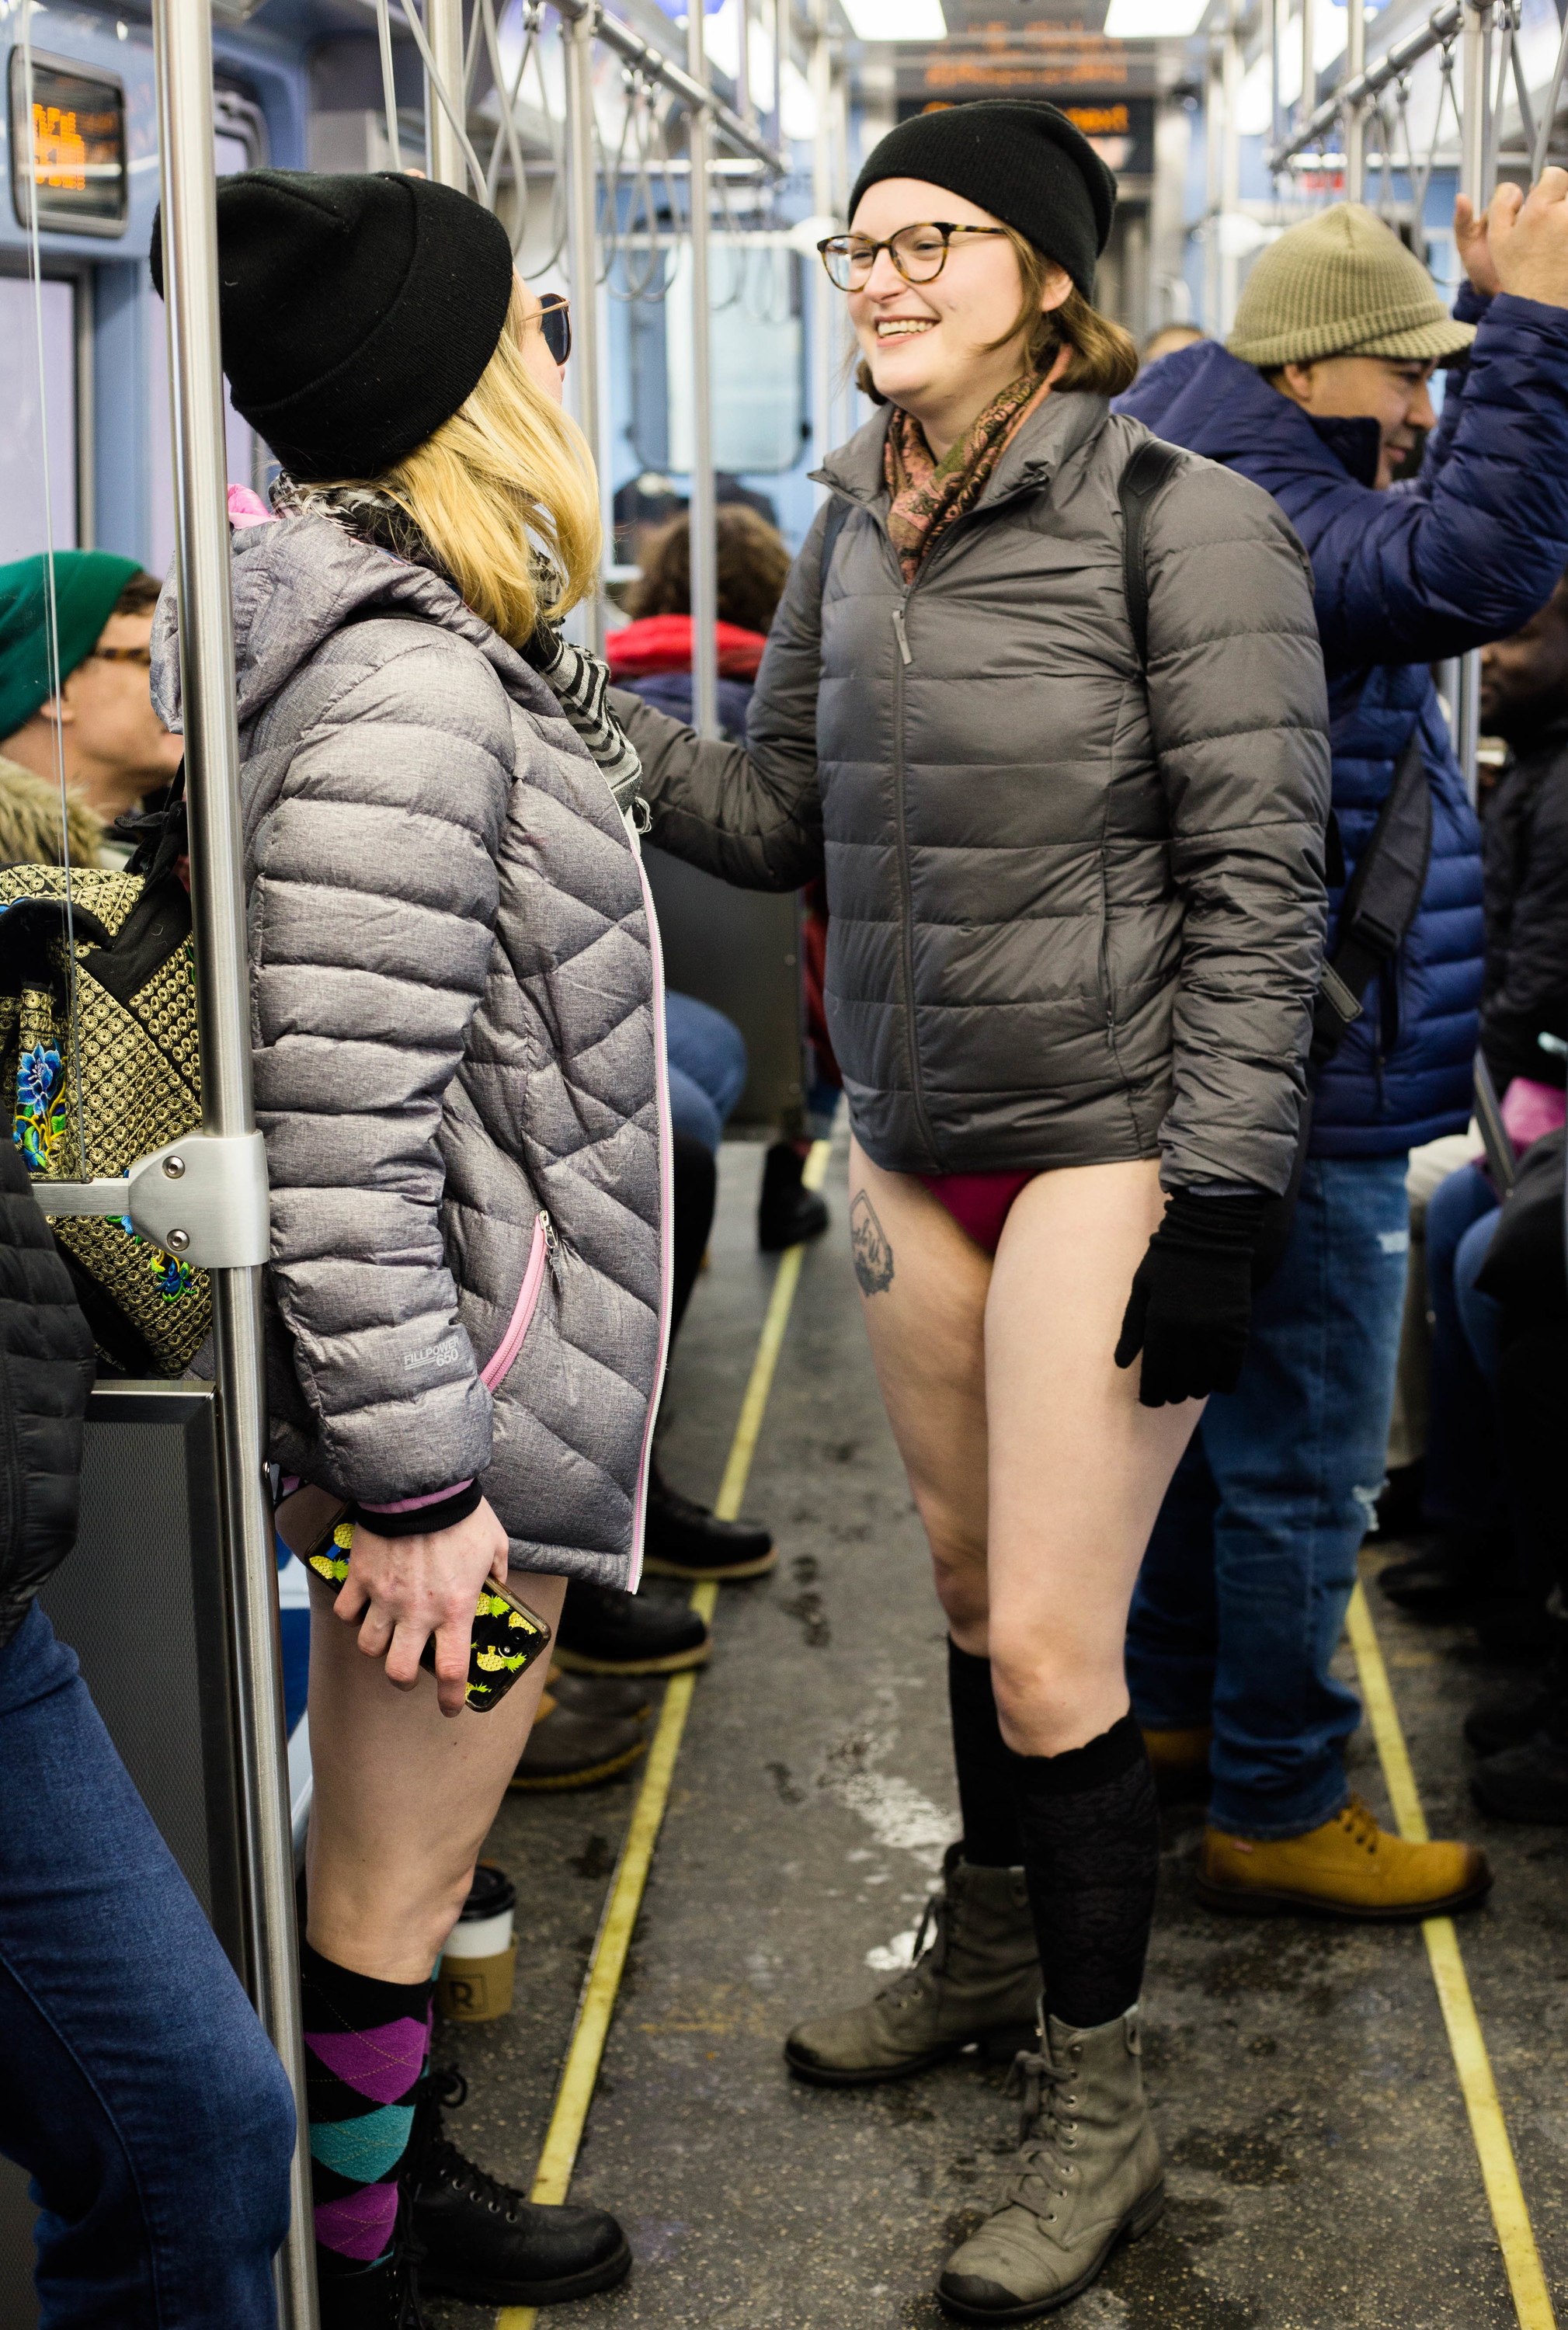 Take a look at photos from Chicago’s No Pants Subway Ride 2020